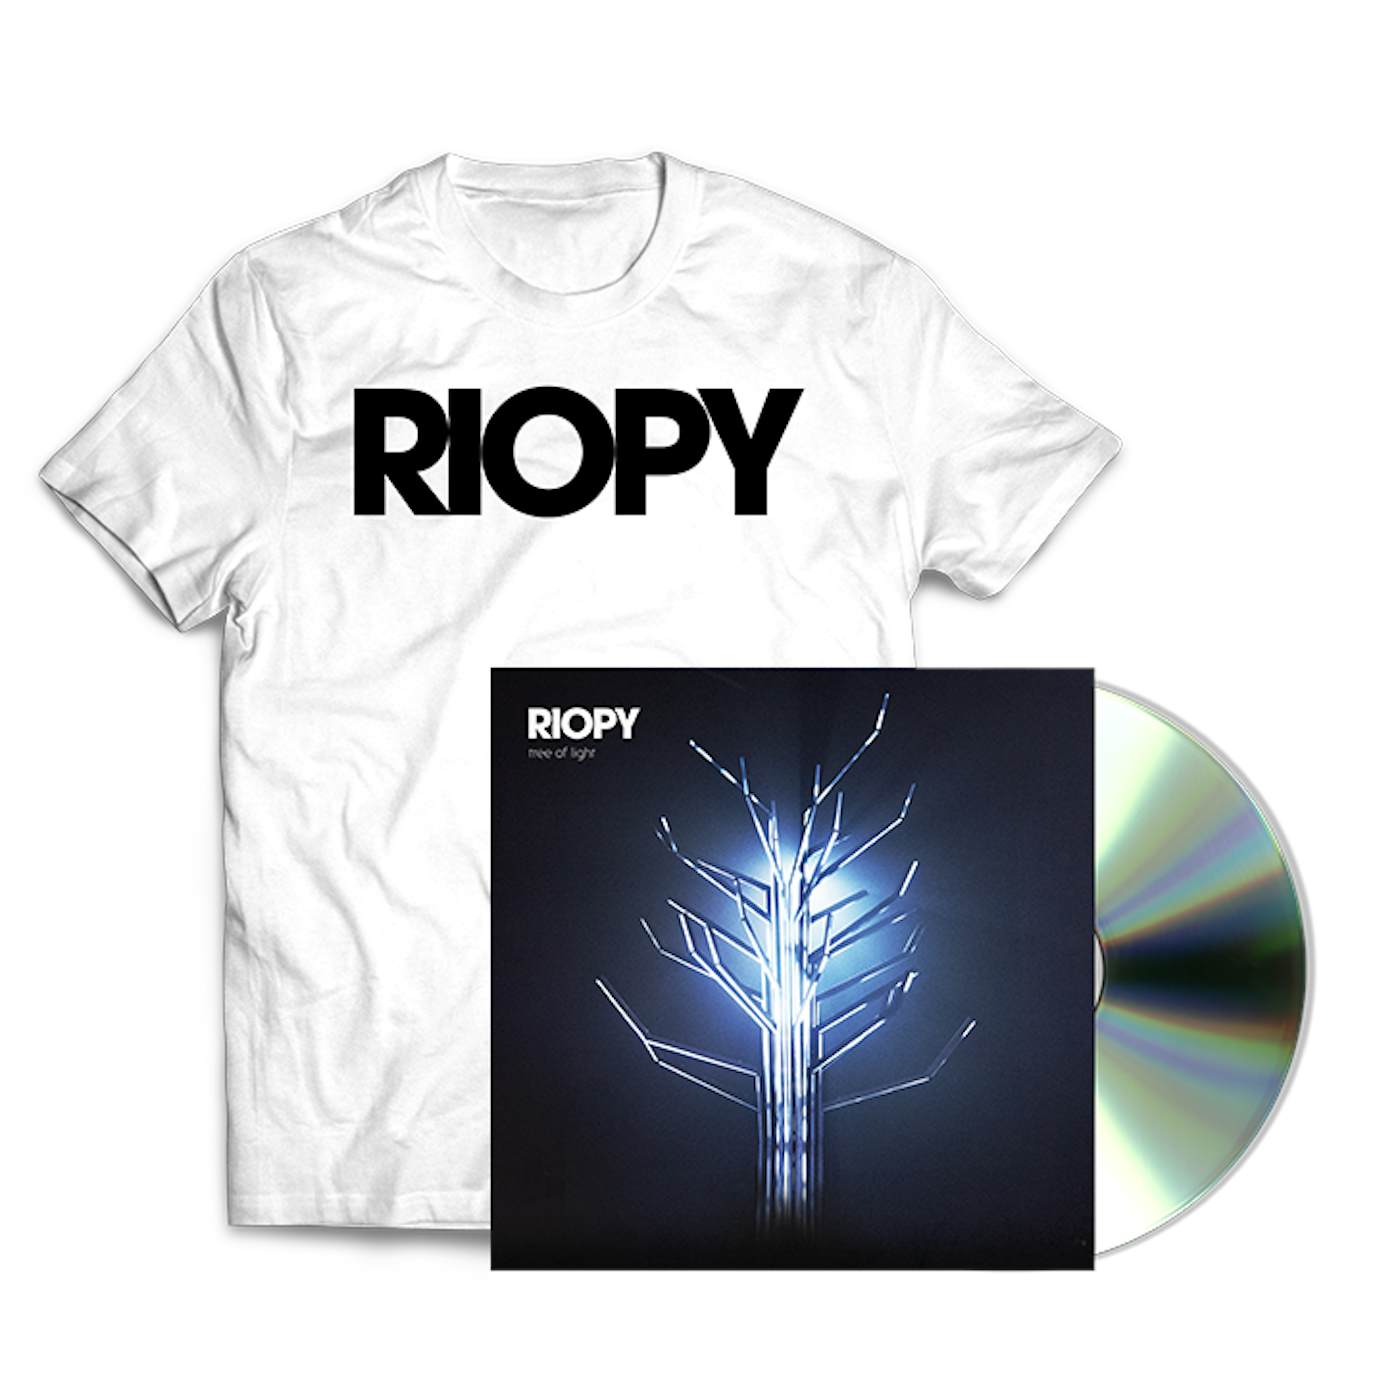 RIOPY Tree of Light Signed CD & T-shirt Bundle